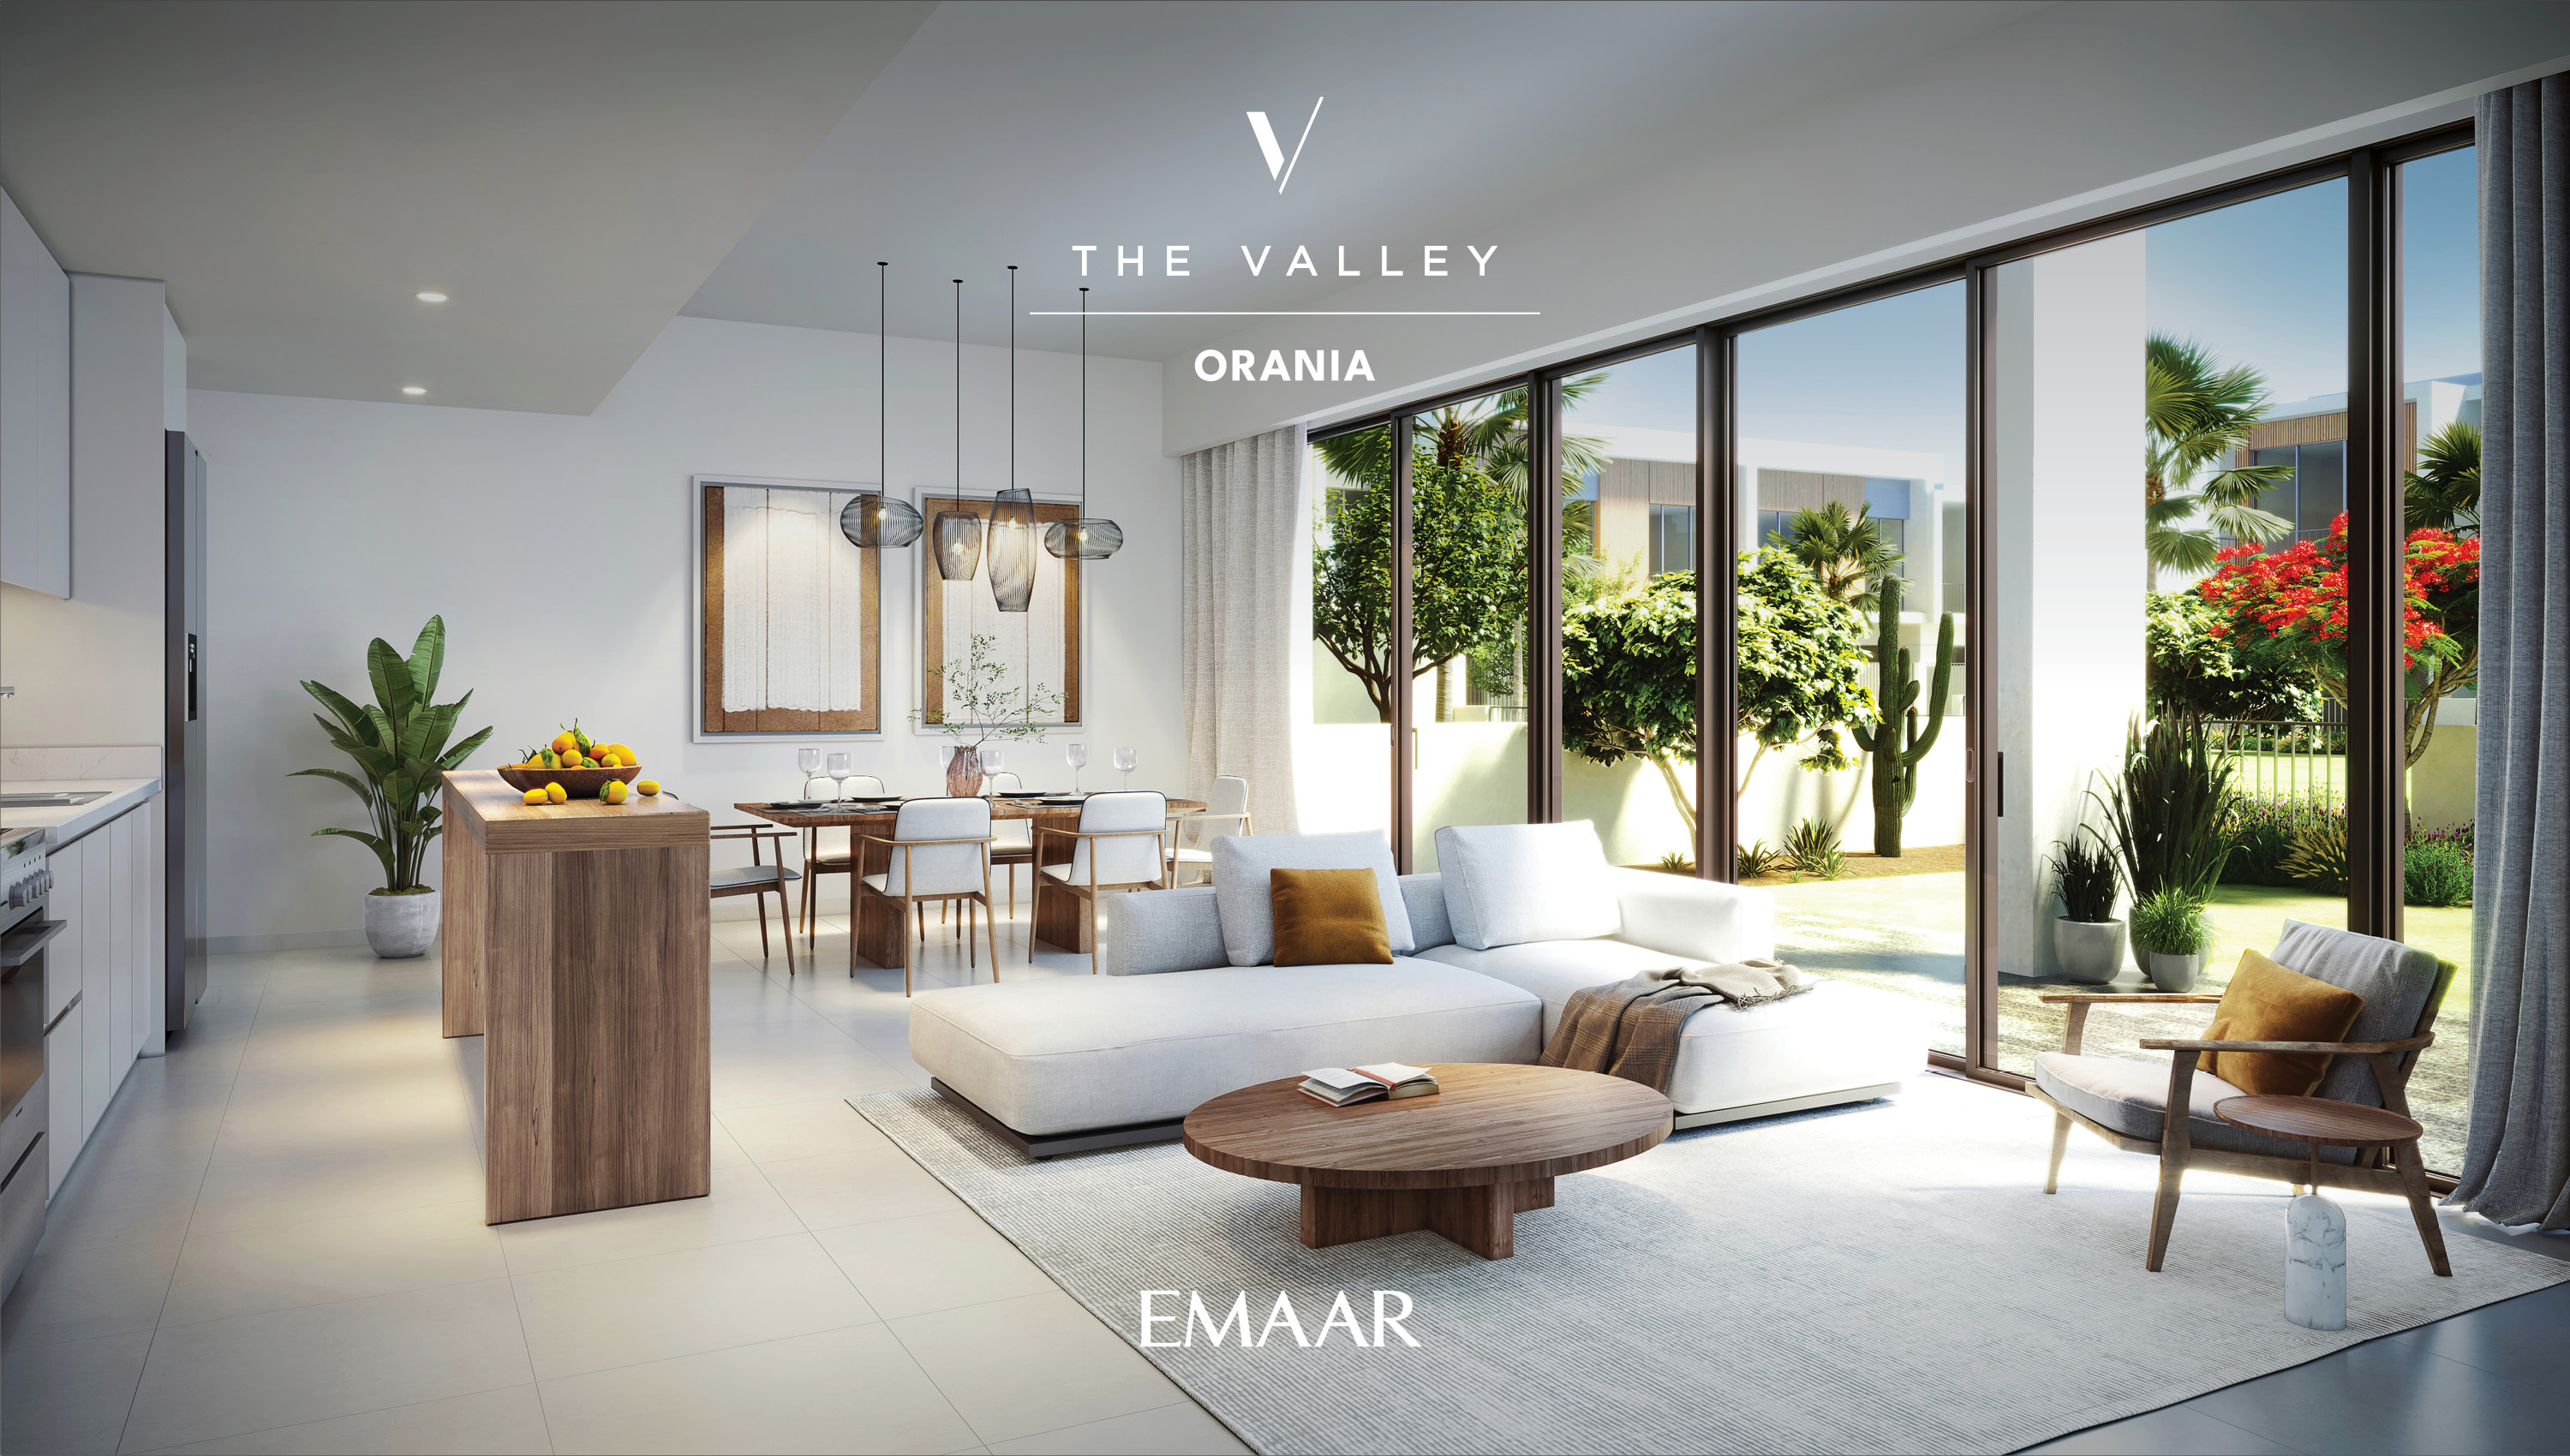 Orania in The Valley by Emaar